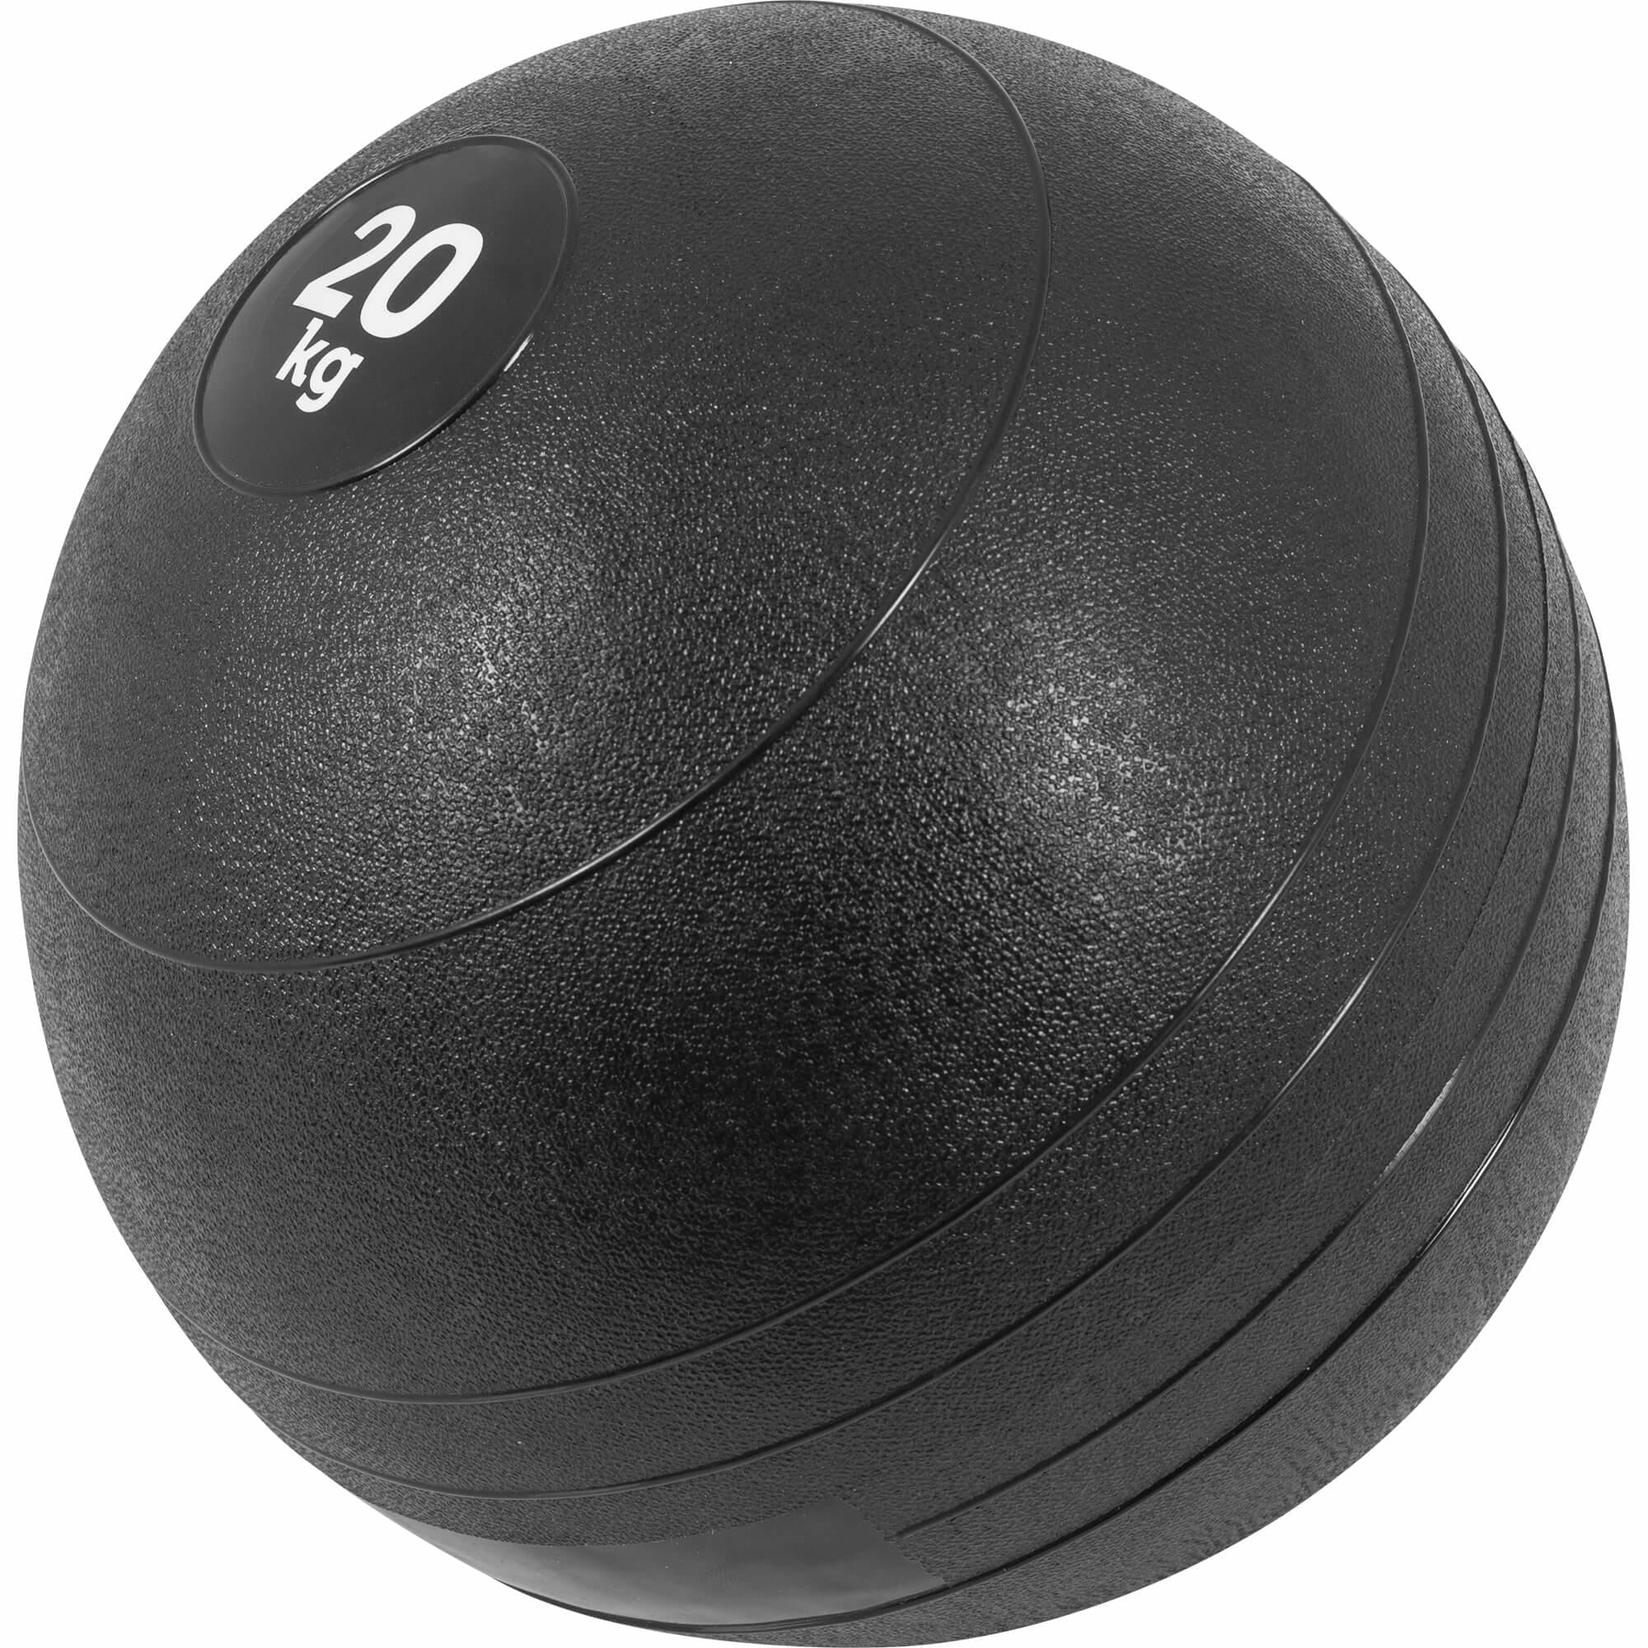 Selected image for GORILLA SPORTS Medicinska lopta Slam Ball 20 kg